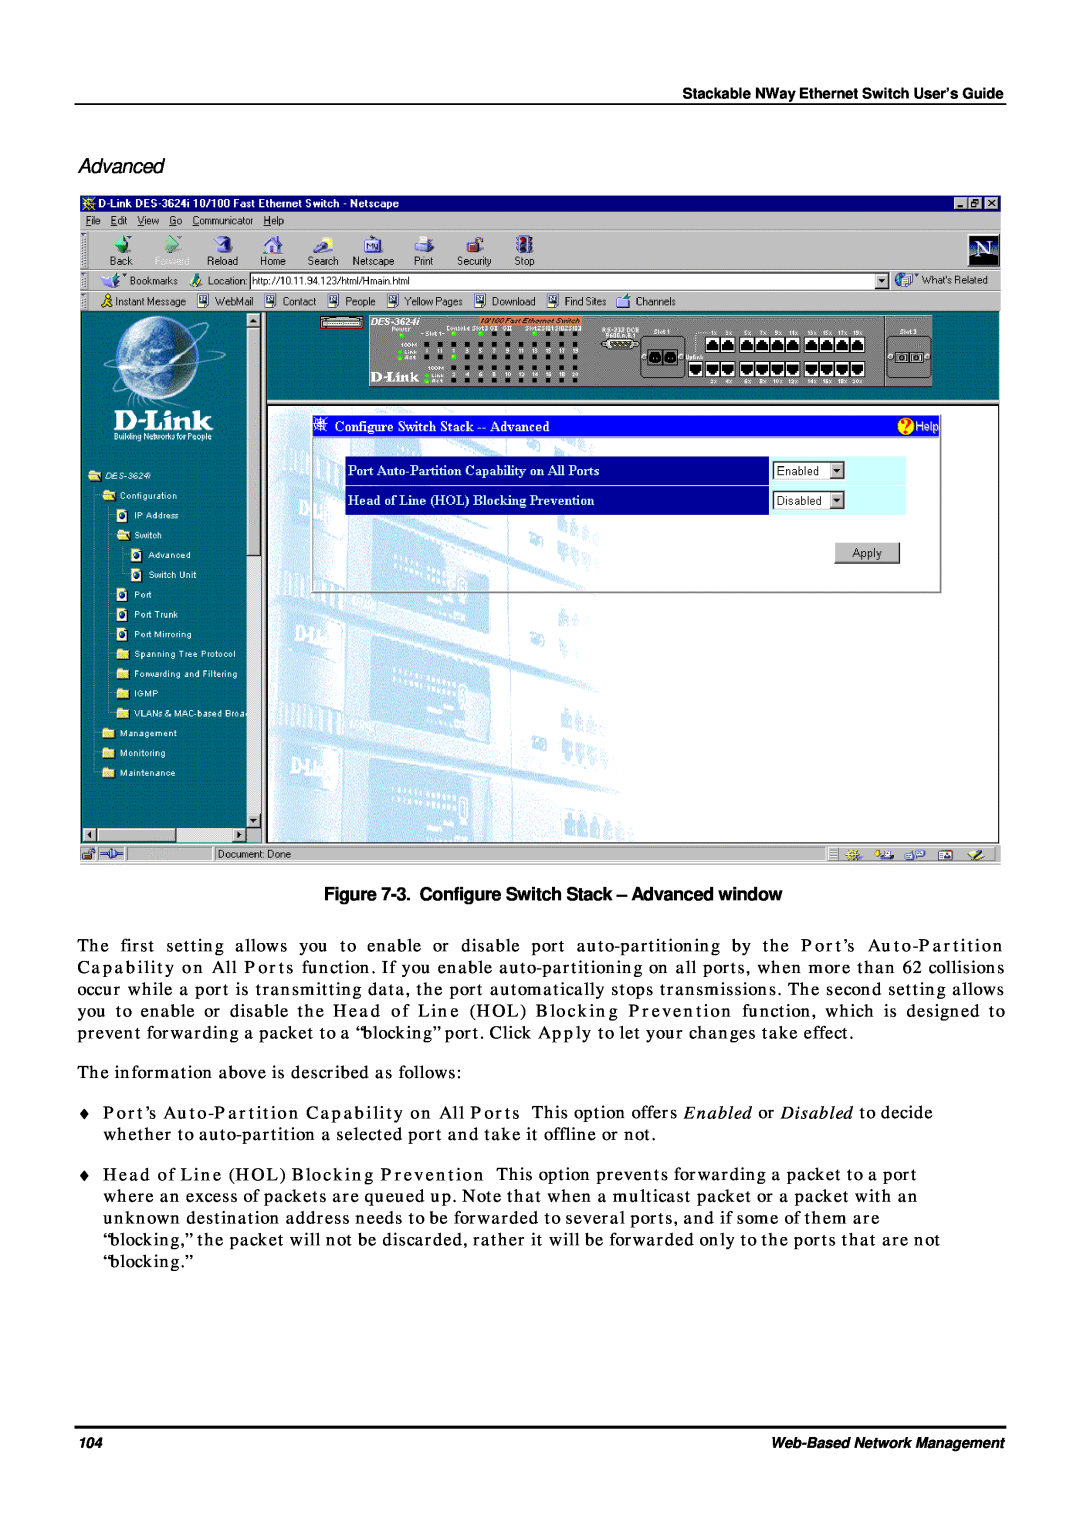 D-Link DES-3624 manual 3. Configure Switch Stack - Advanced window 